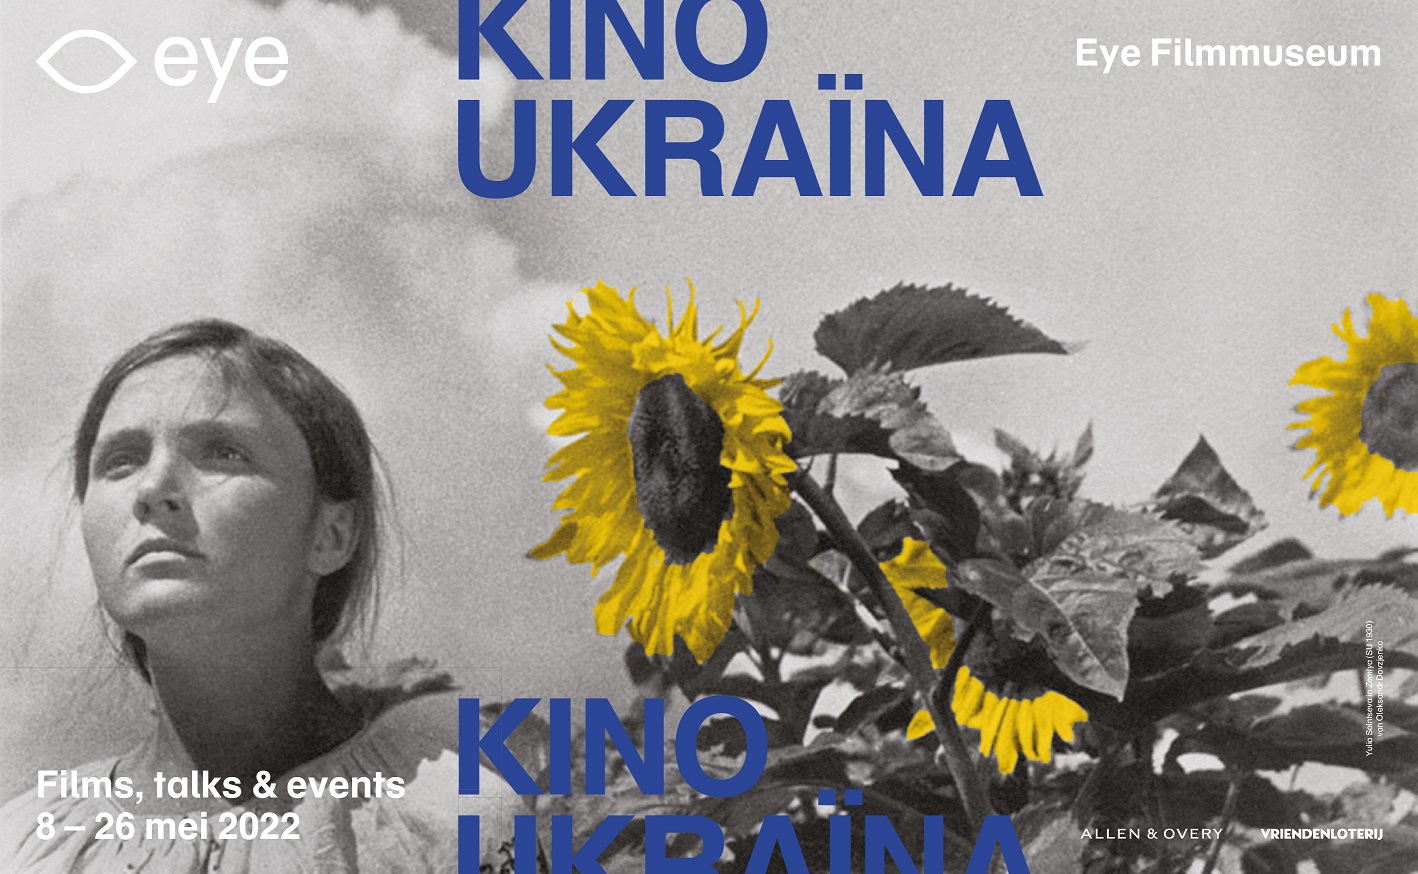 Kino Ukraïna: Oekraïense films te zien in Eye